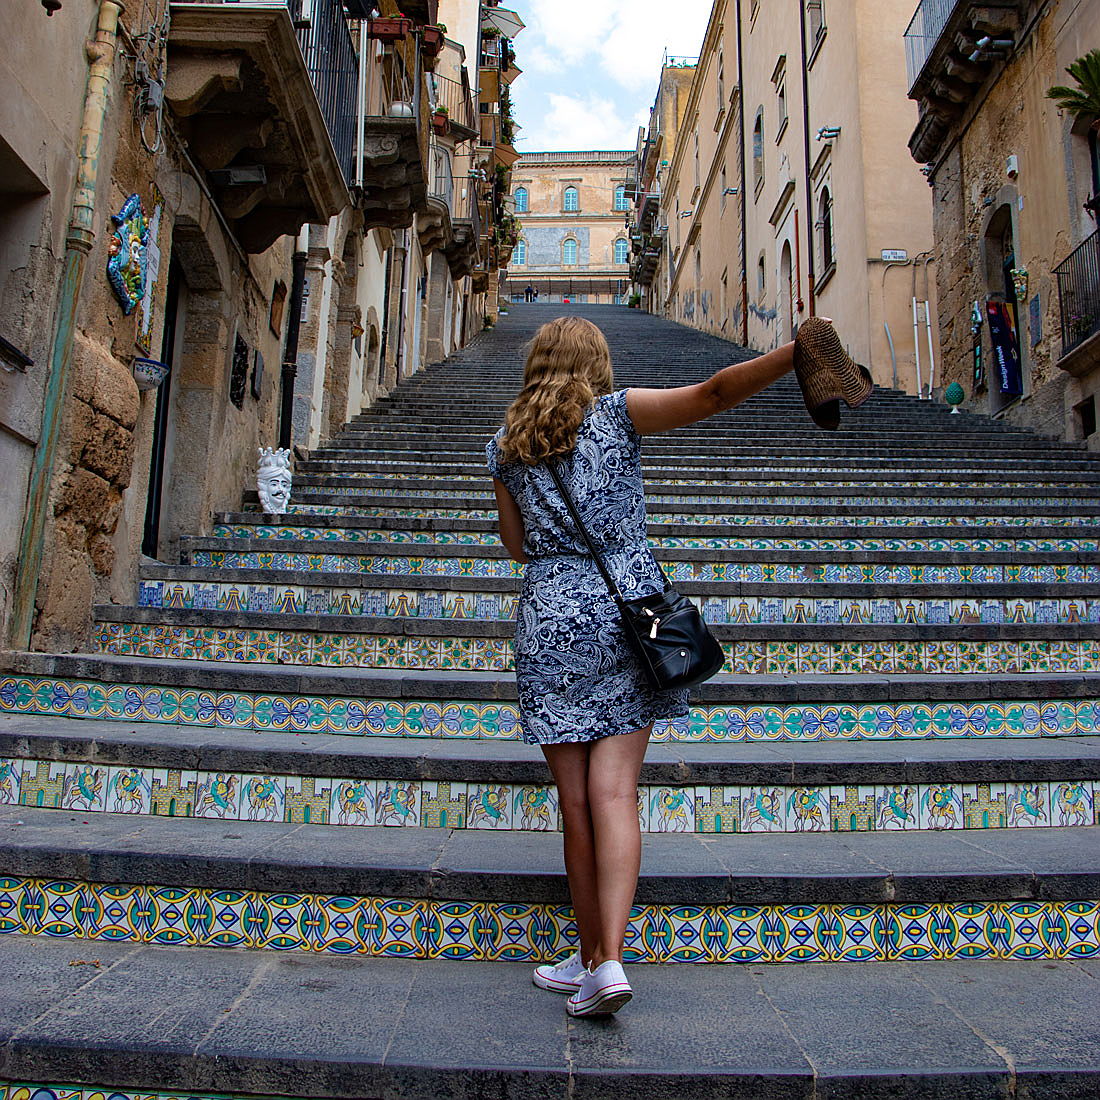  Catania
- ragazza-scalinata-caltagirone.jpg